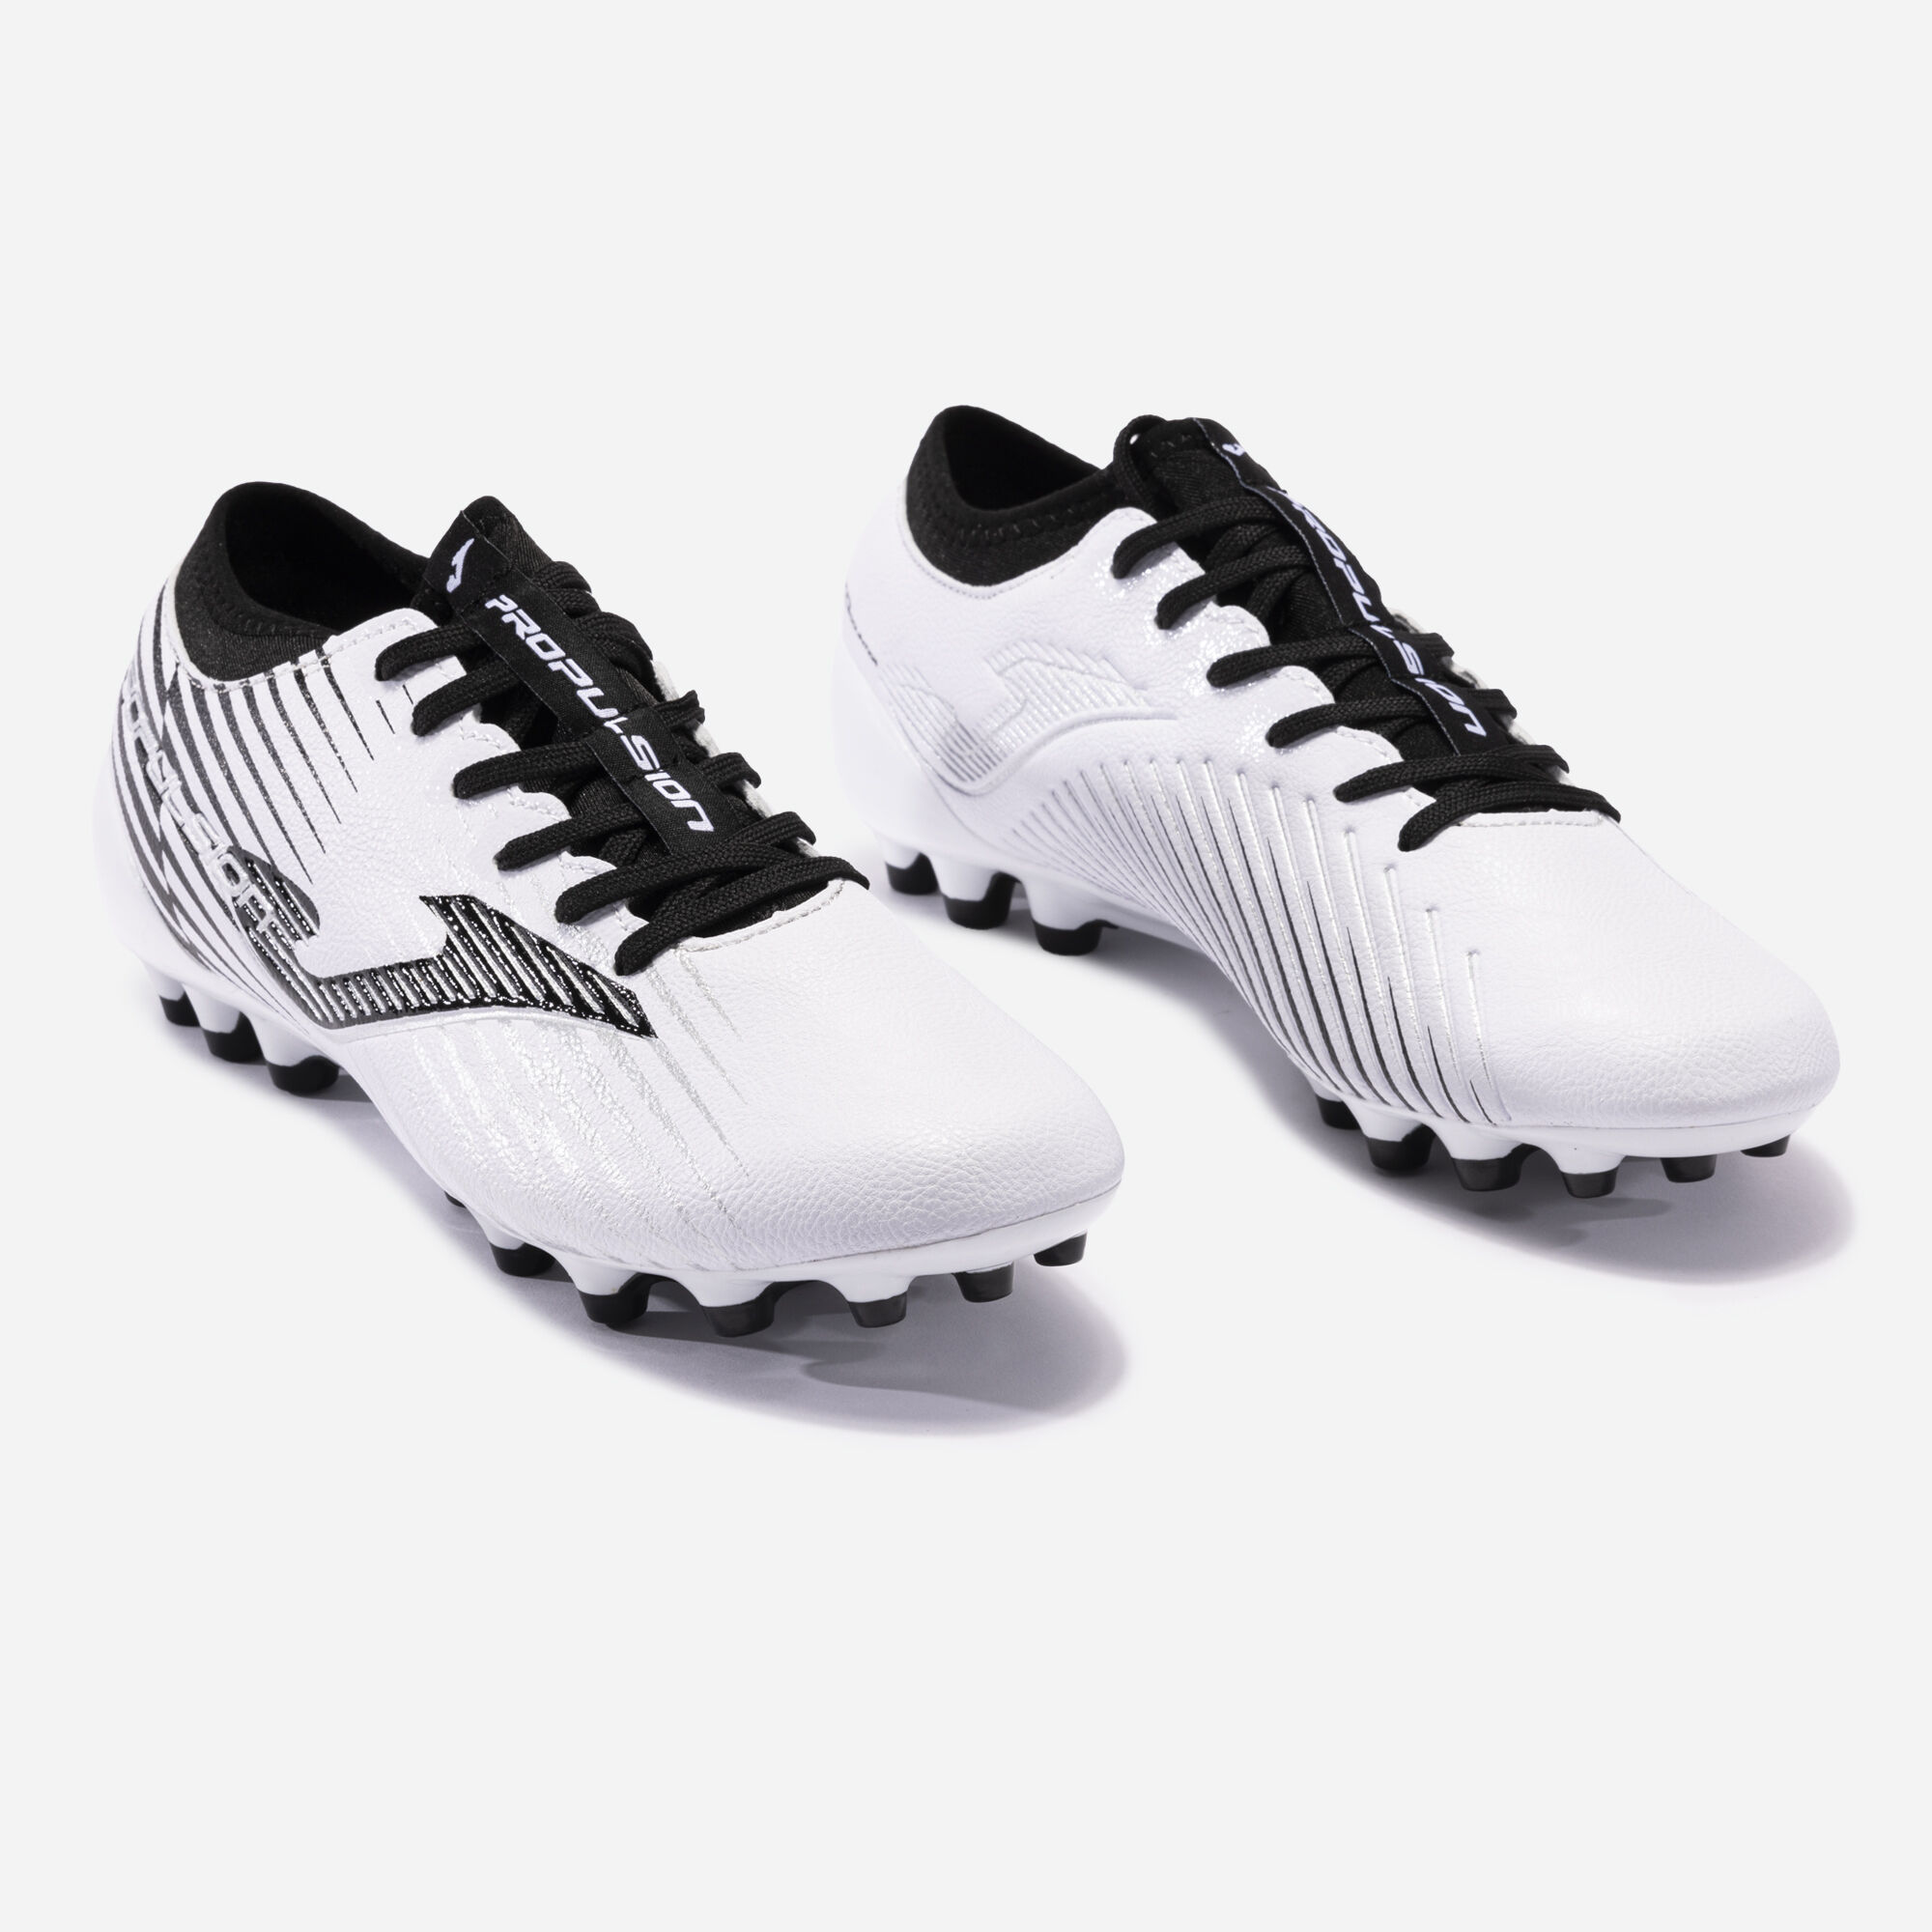 Chaussures football Propulsion Cup 23 gazon synthétique AG blanc noir